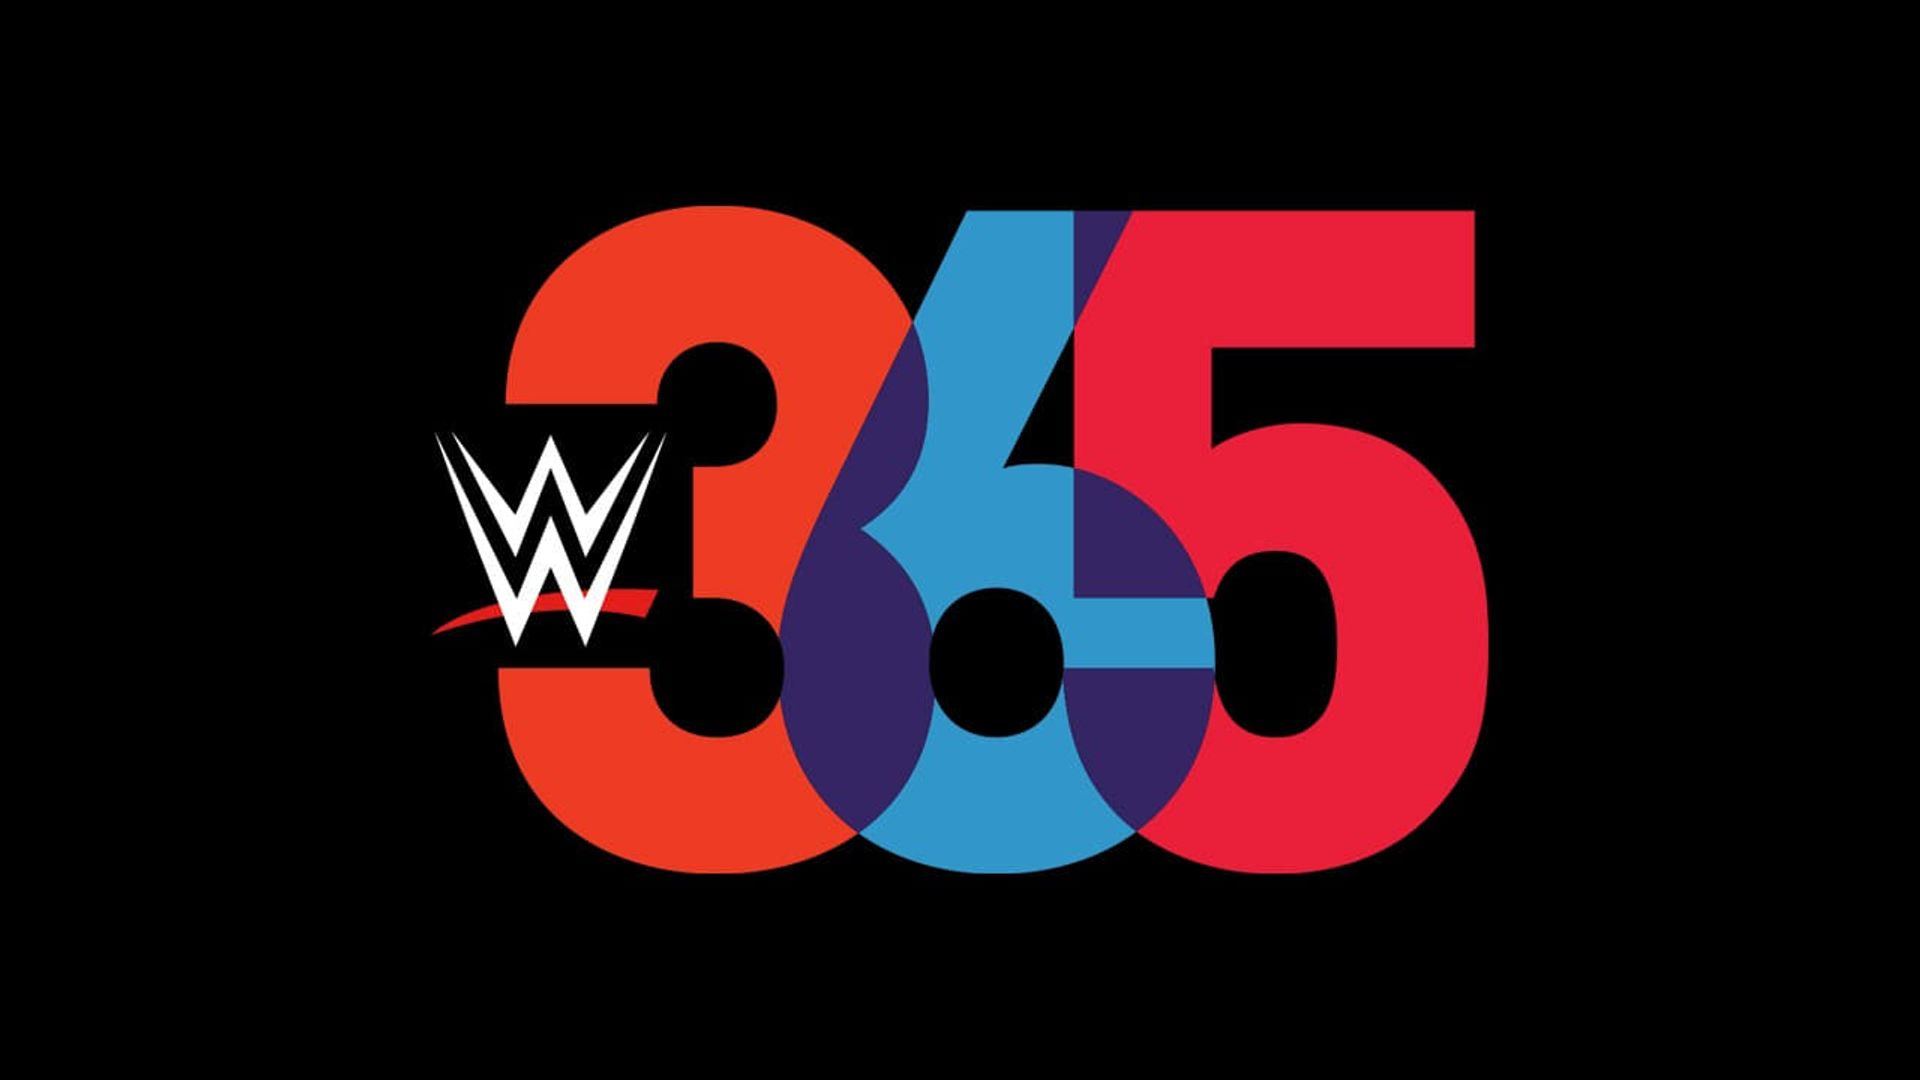 WWE 365 background